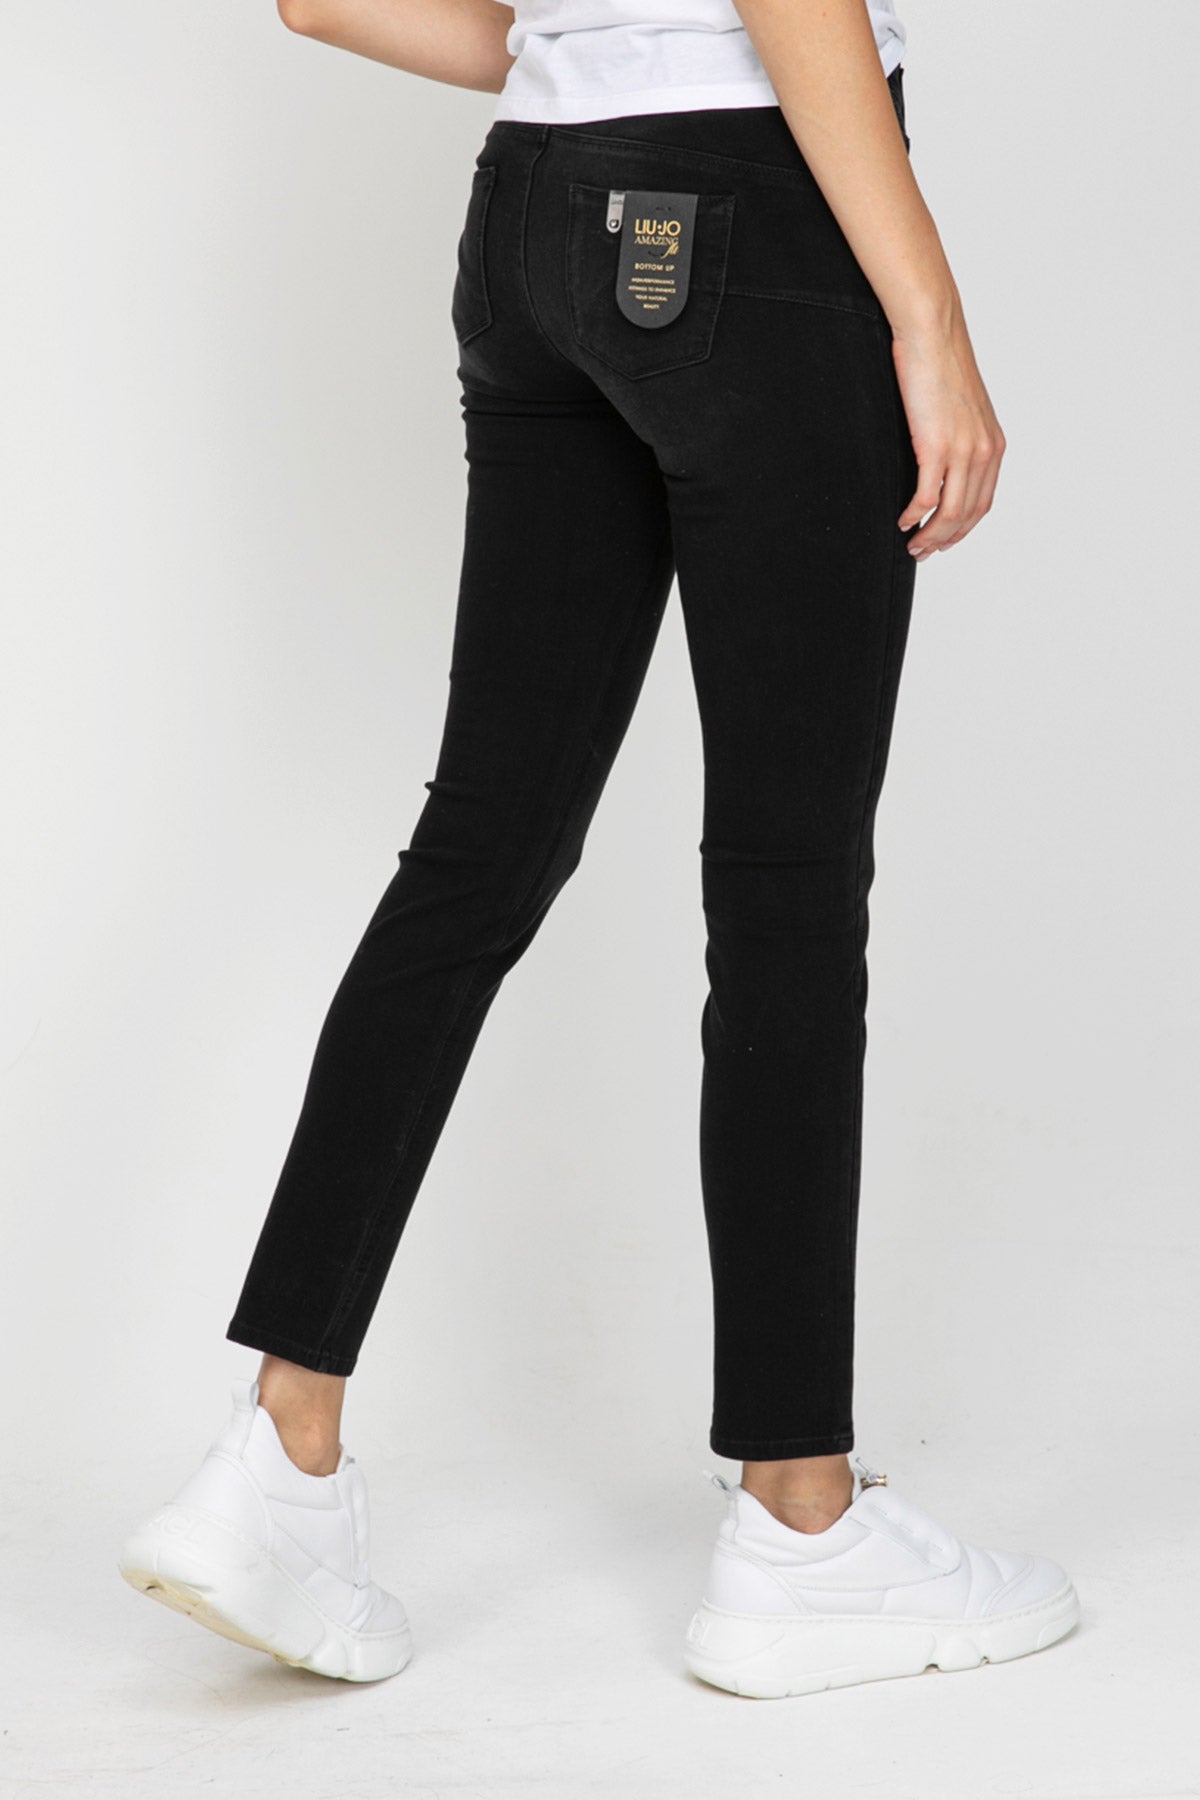 Liu Jo Amazing Fit Bottom Up Jeans-Libas Trendy Fashion Store